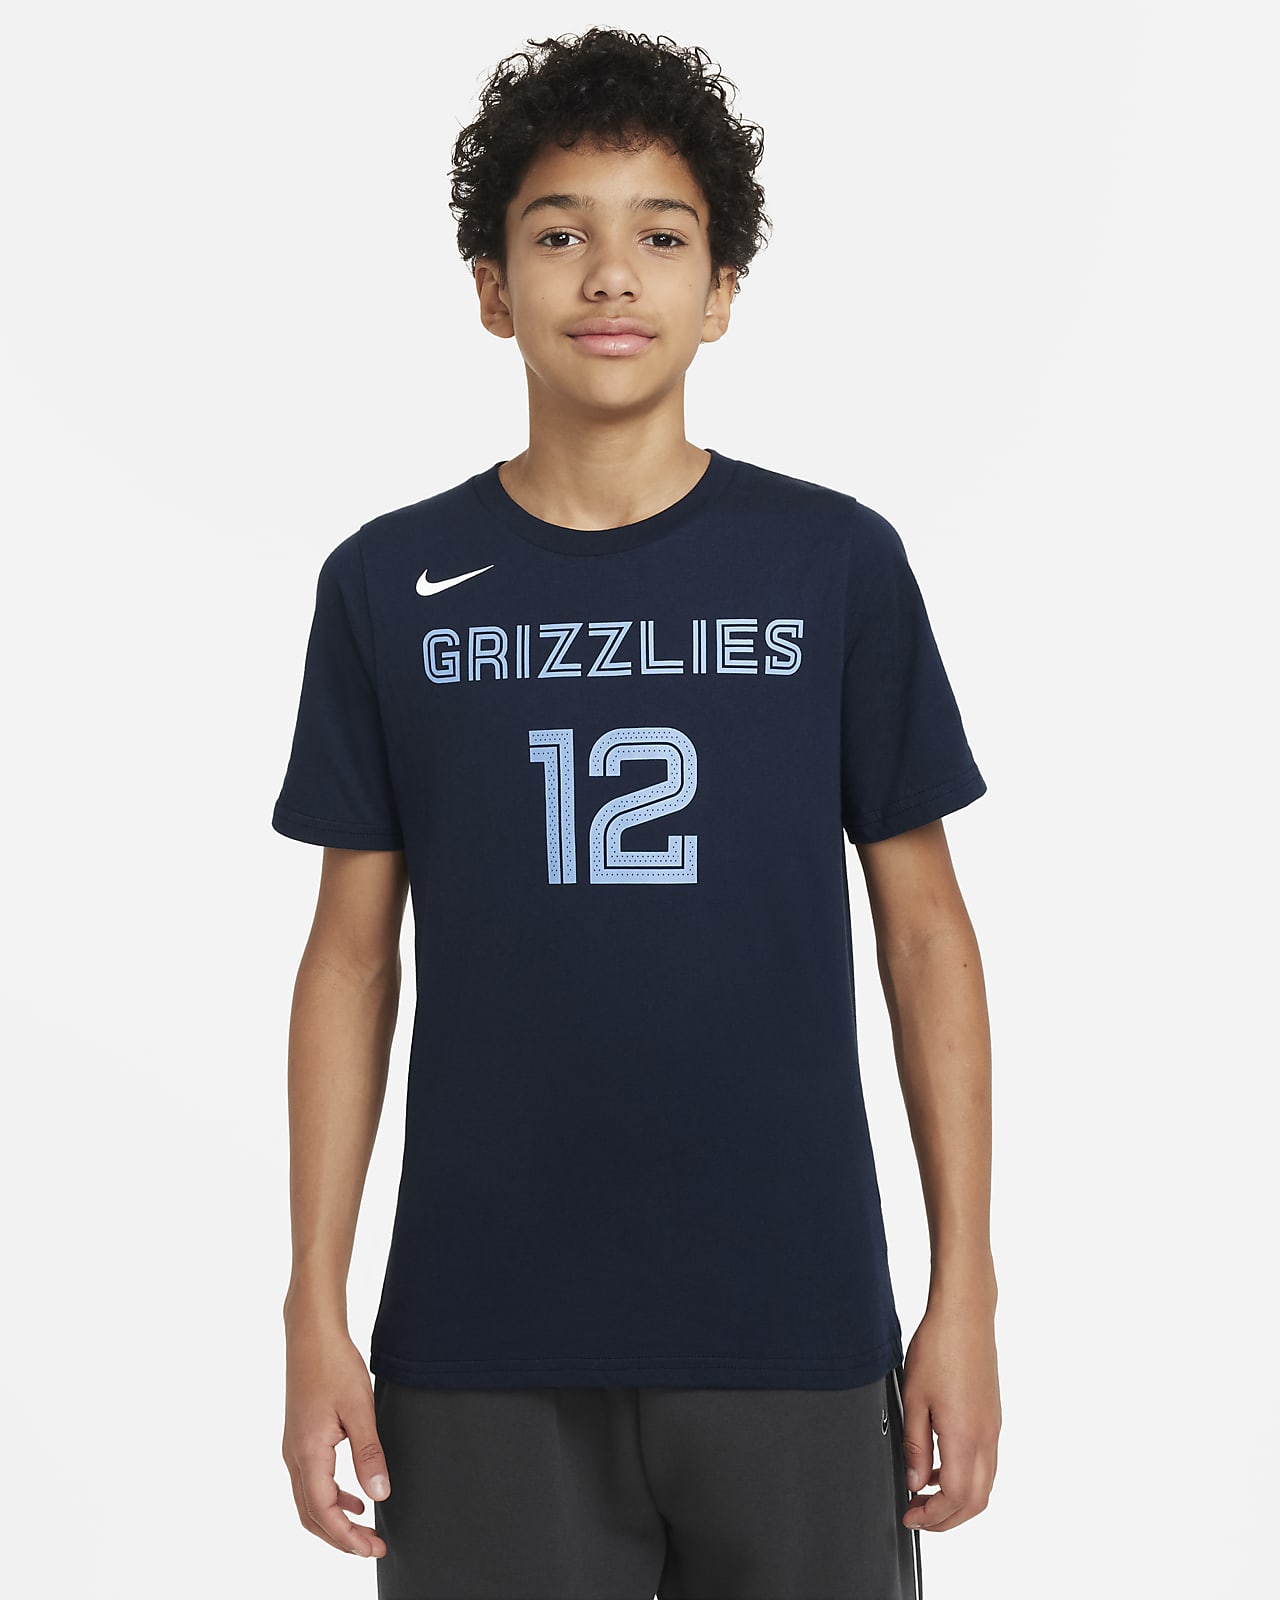 Ja Morant Memphis Grizzlies Camiseta Nike NBA - Niño/a